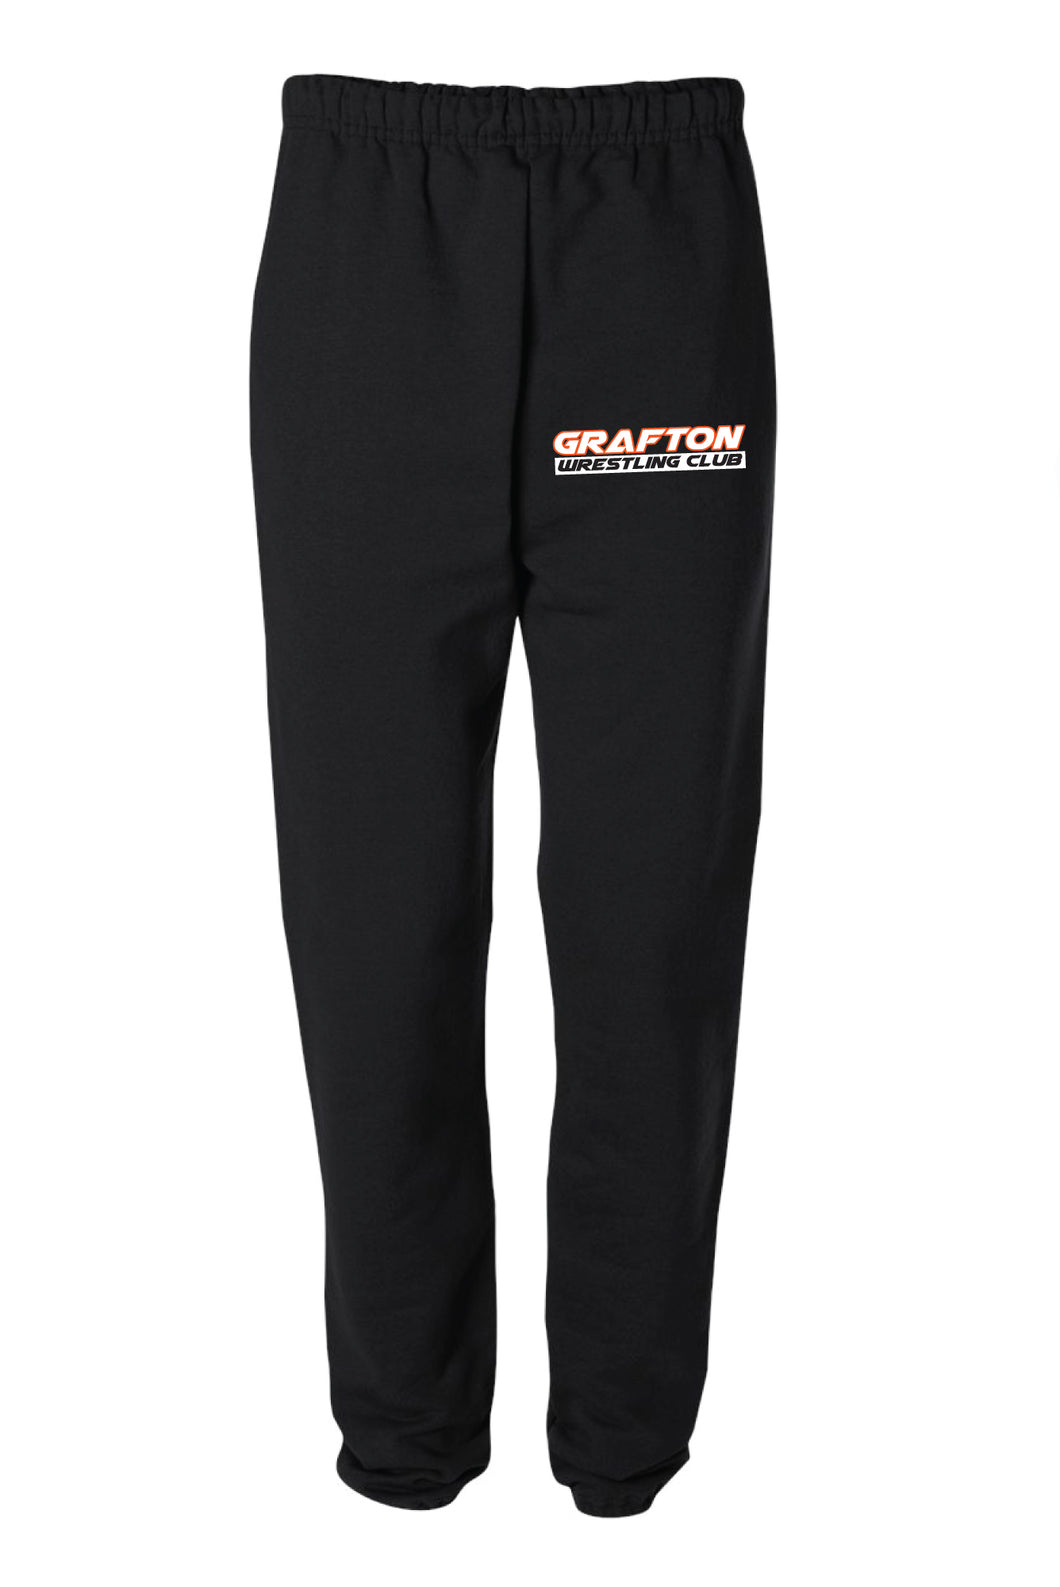 Grafton Wrestling Cotton Sweatpants - Black - 5KounT